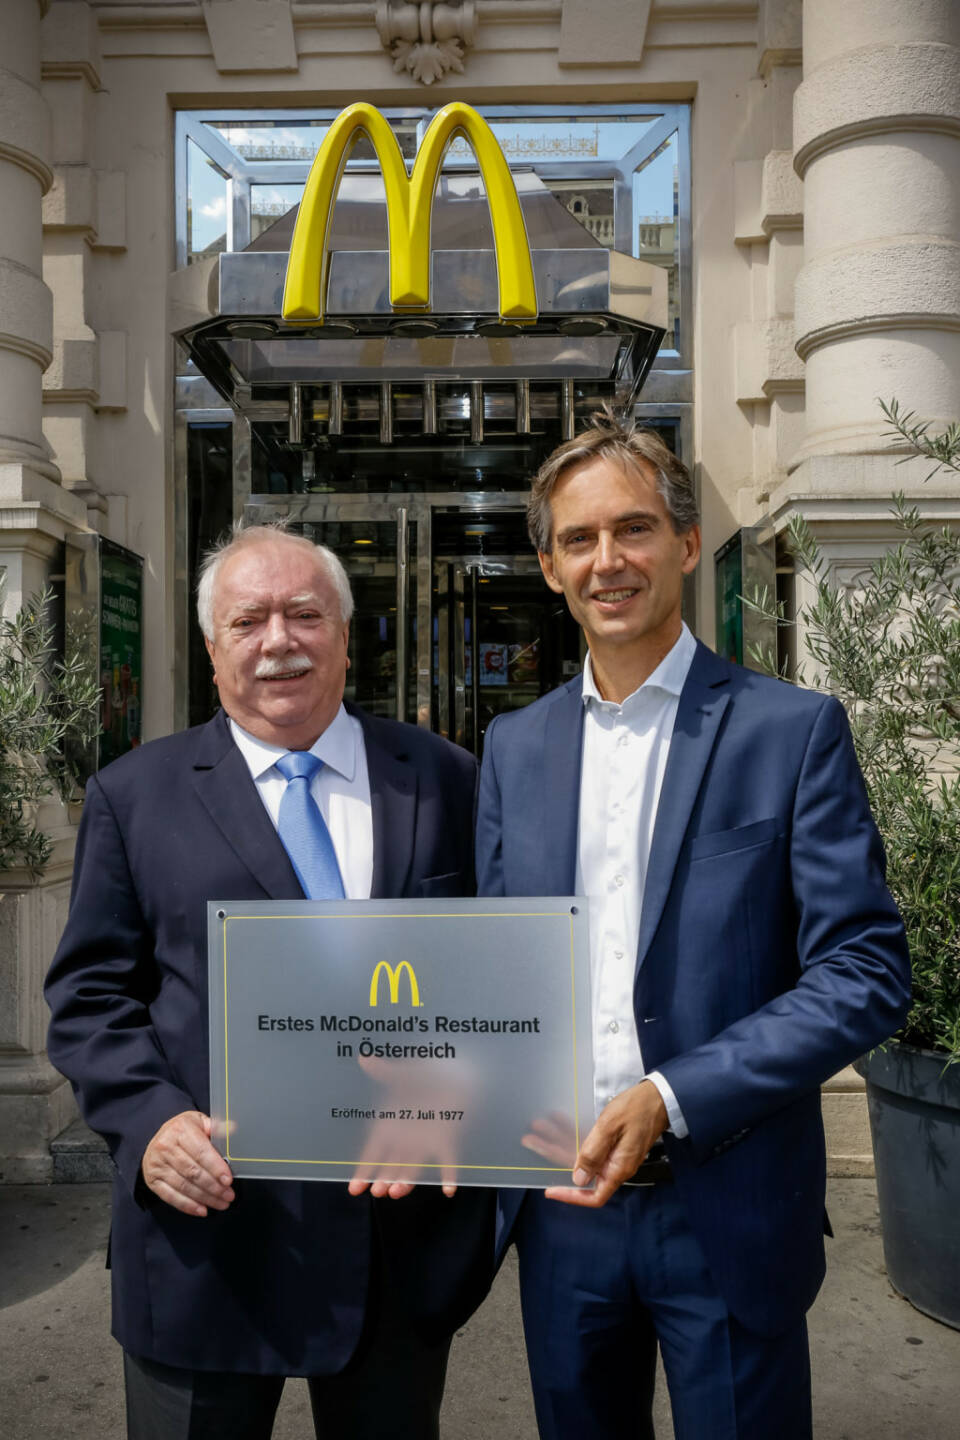 McDonald's Österreich: Bürgermeister gratuliert Burgermeister, v.l.n.r.: Dr. Michael Häupl und Andreas Schmidlechner, Bildcredit: McDonald's Österreich, Fotograf: Christian Husar